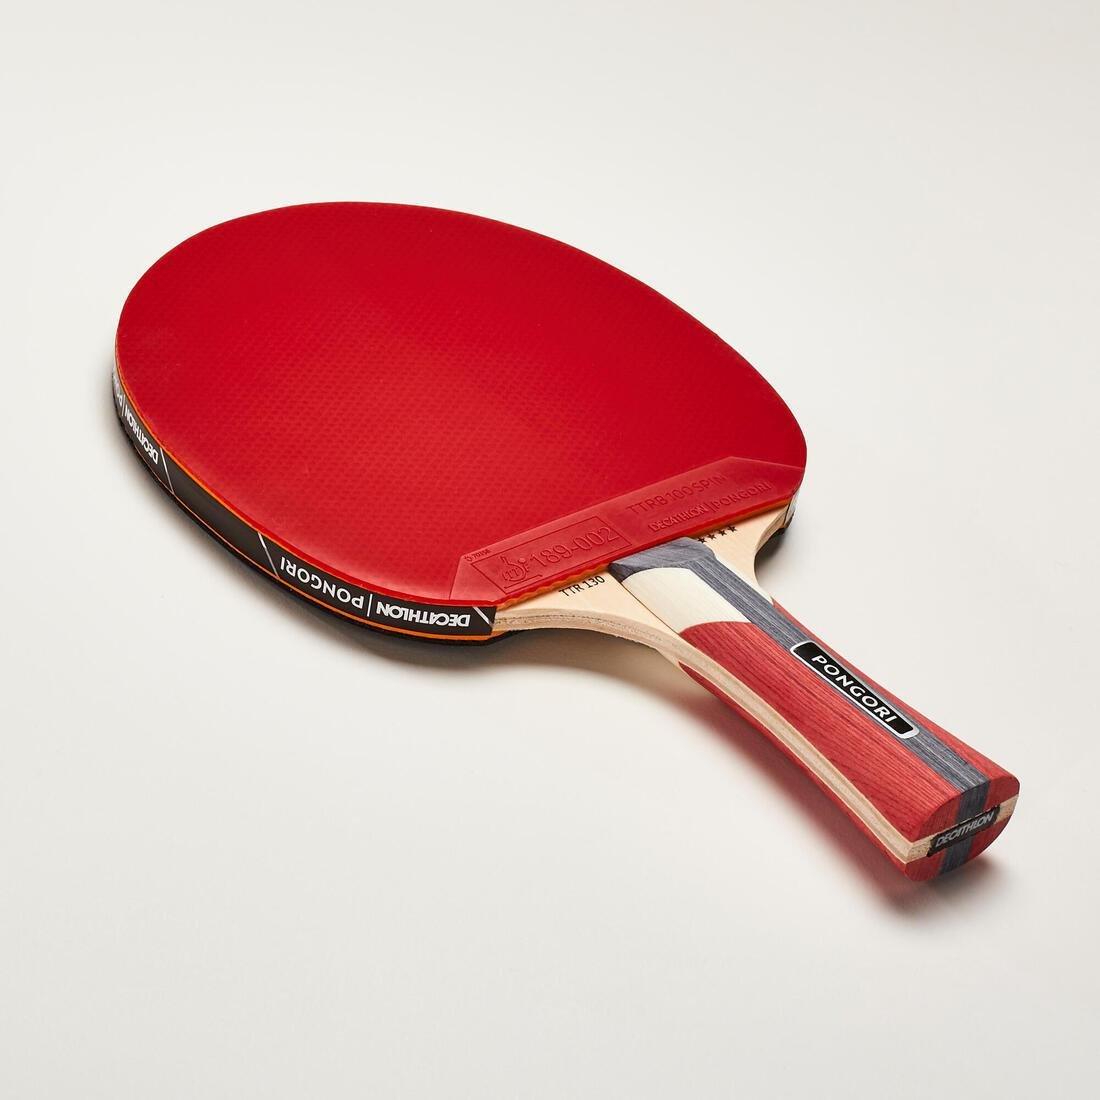 PONGORI - TTR 130 4* Spin Club and School Table Tennis Bat, Black